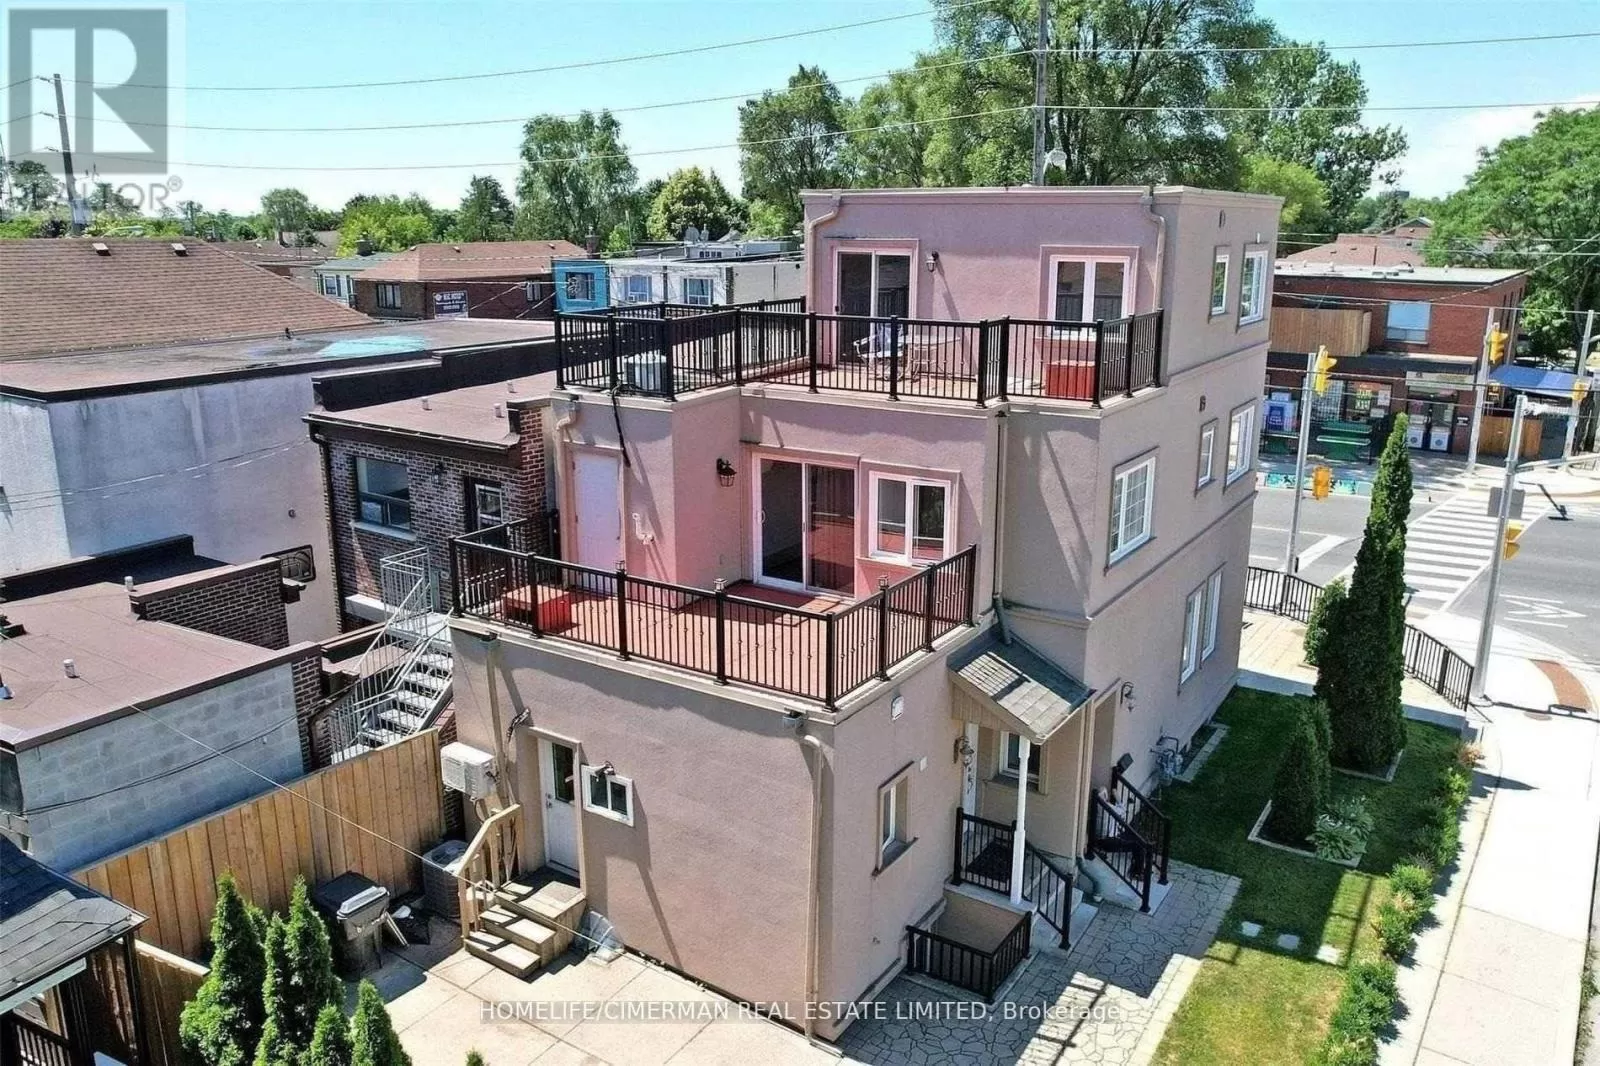 House for rent: 61 Scarlett Road, Toronto, Ontario M6N 4J8